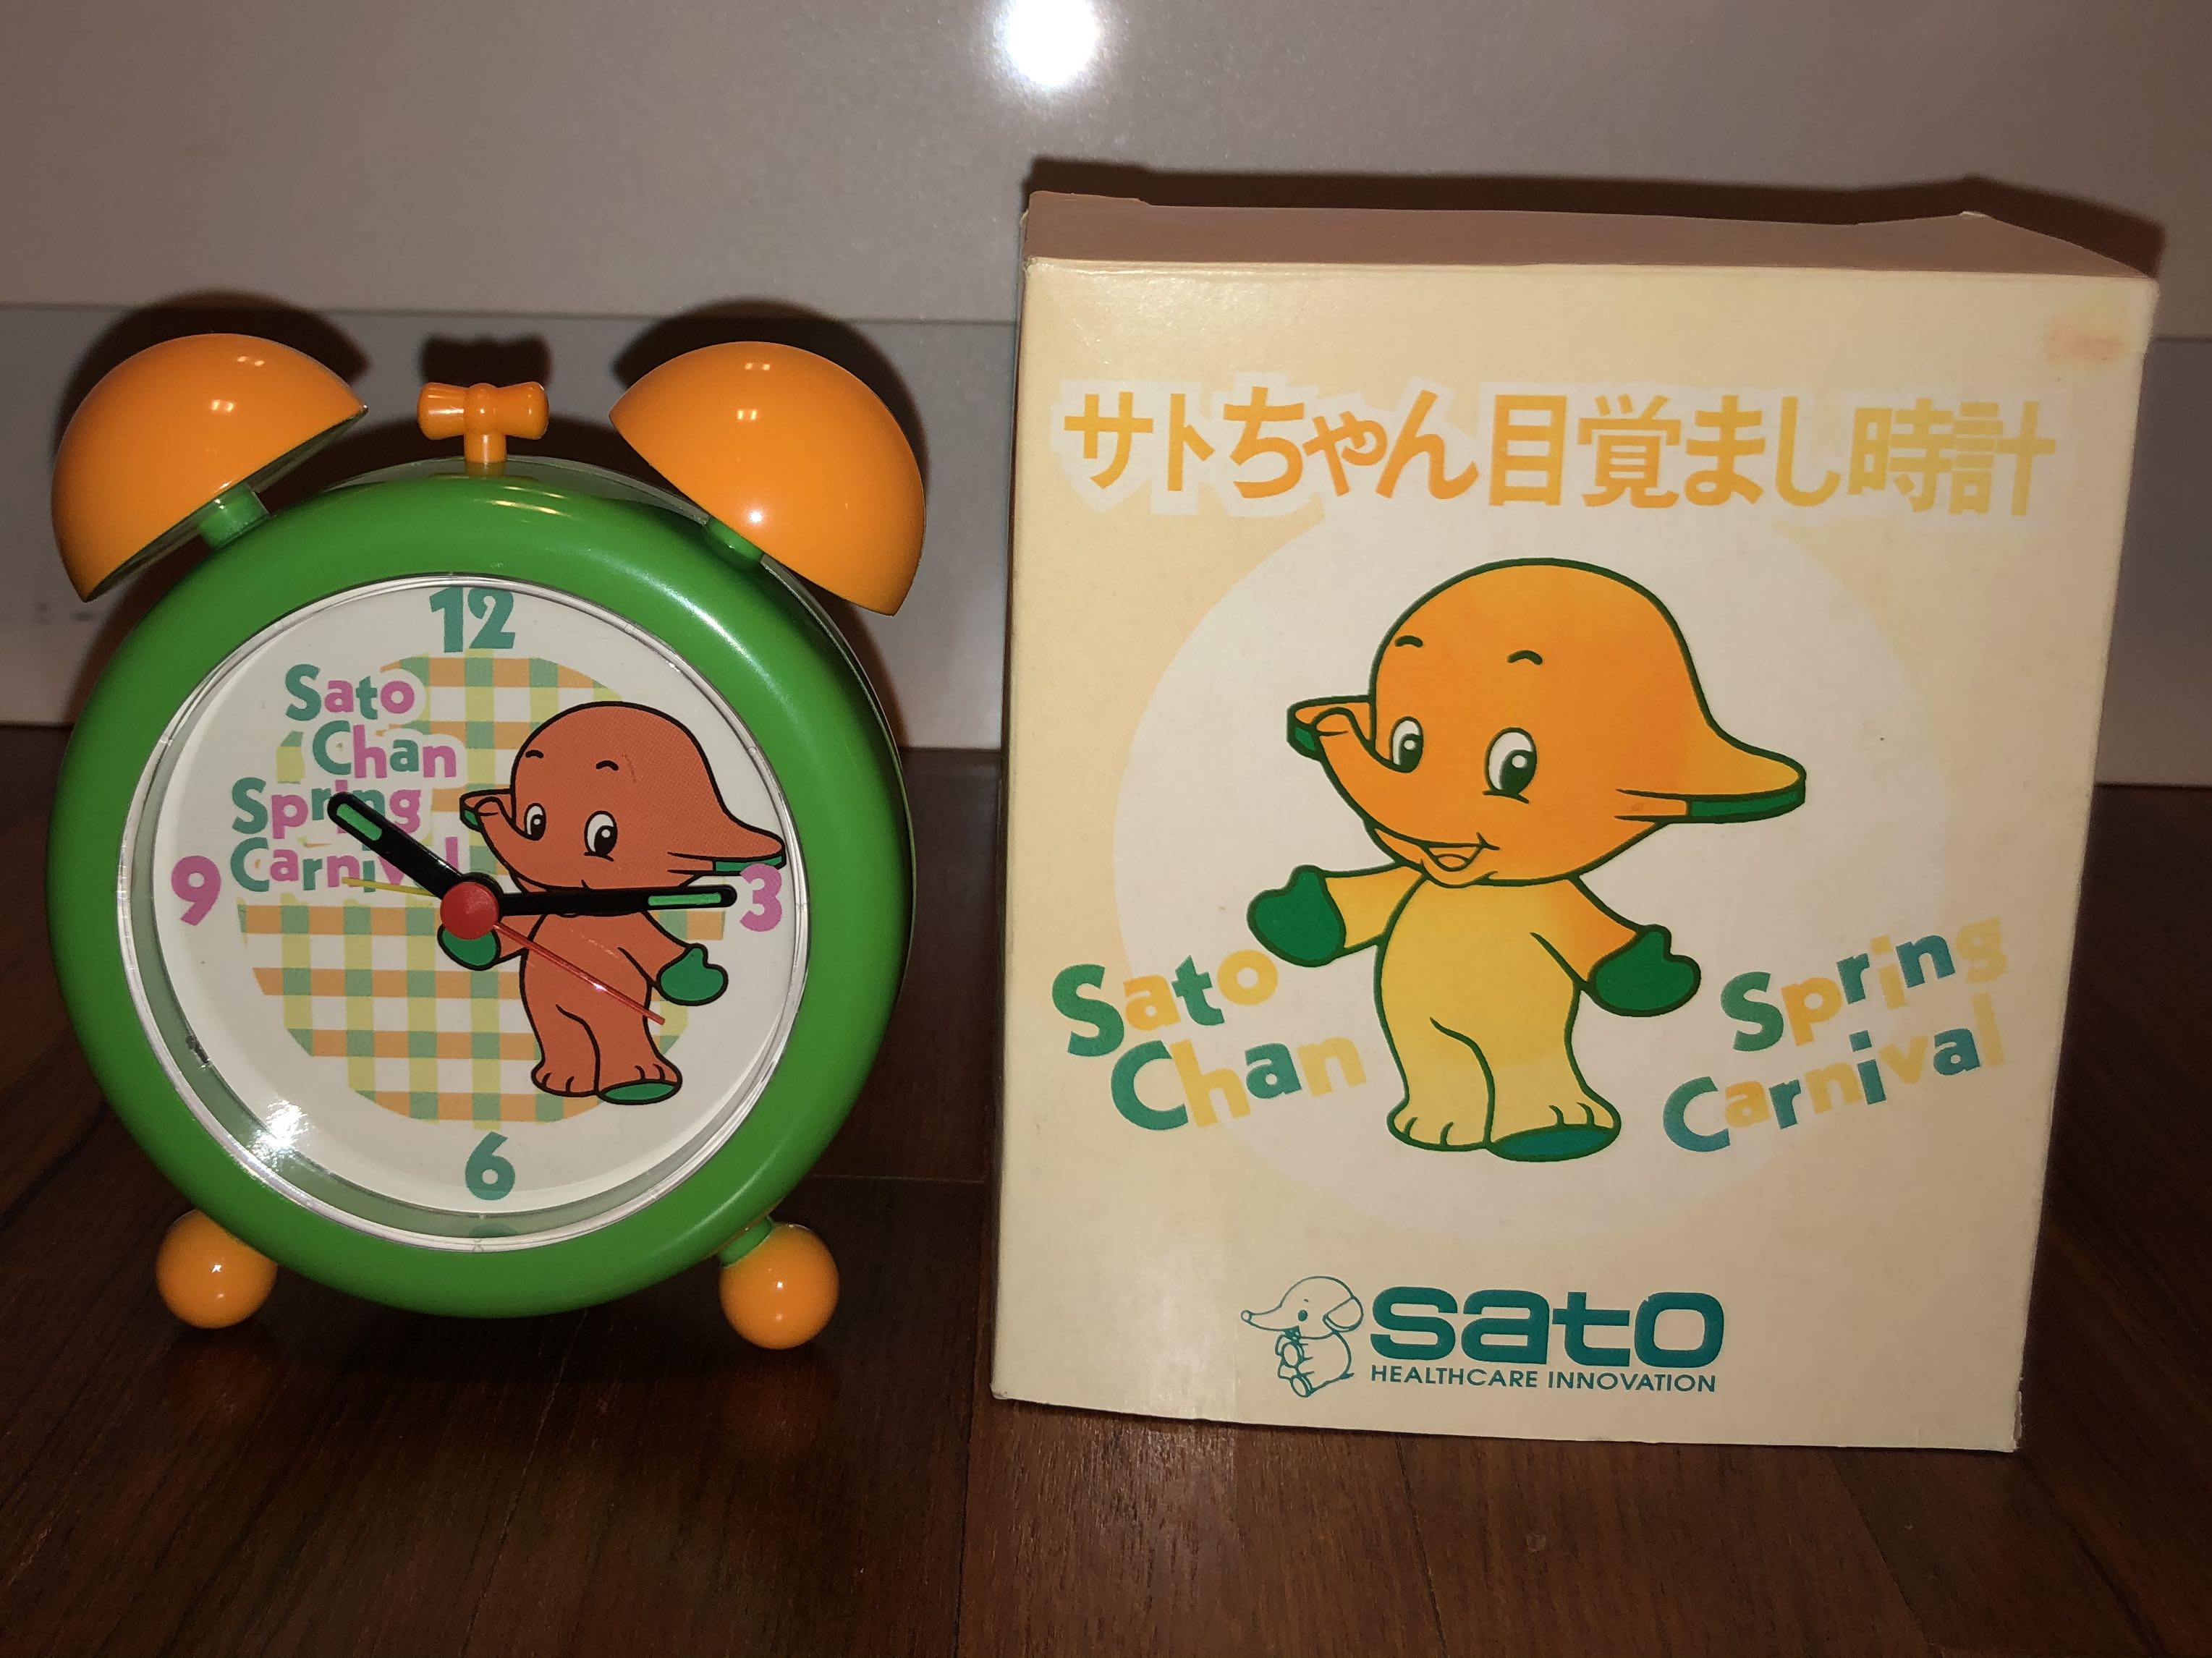 Sato Chan Spring Carnival Alarm Clock Toys Games Bricks Figurines On Carousell